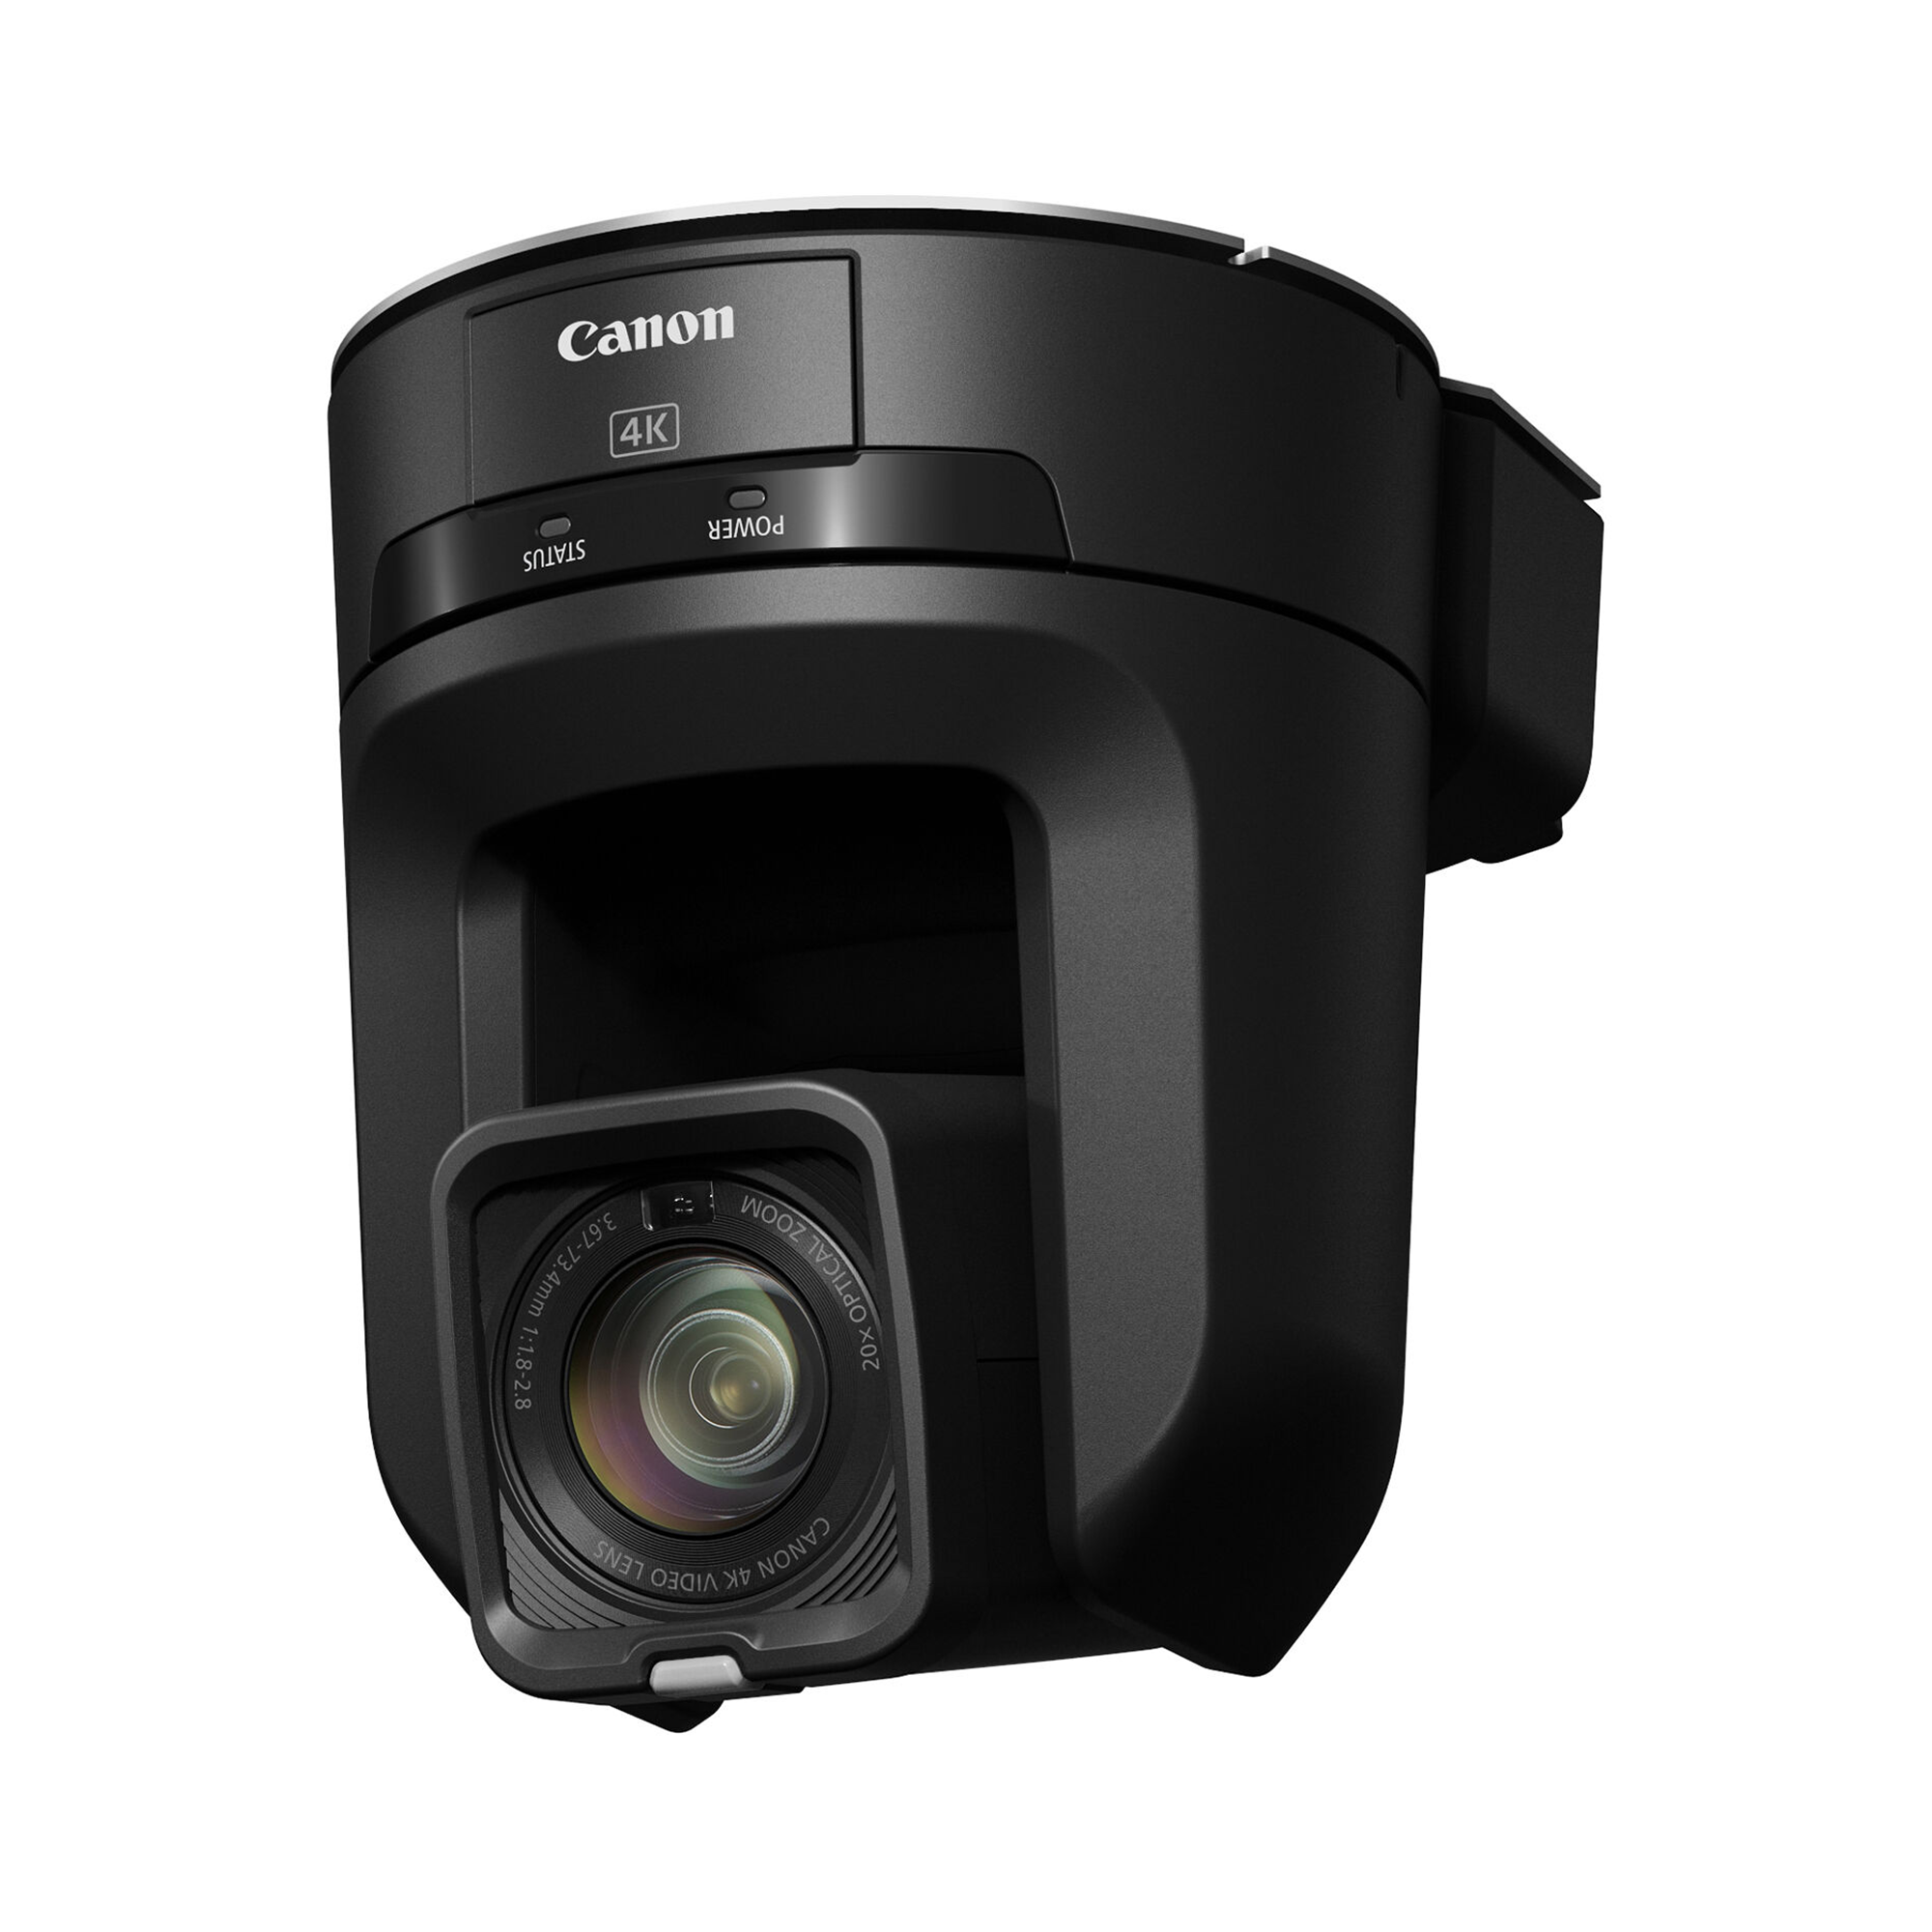 Canon CR-N300 4K NDI PTZ 20x Camera with Auto-Tracking (Satin Black)